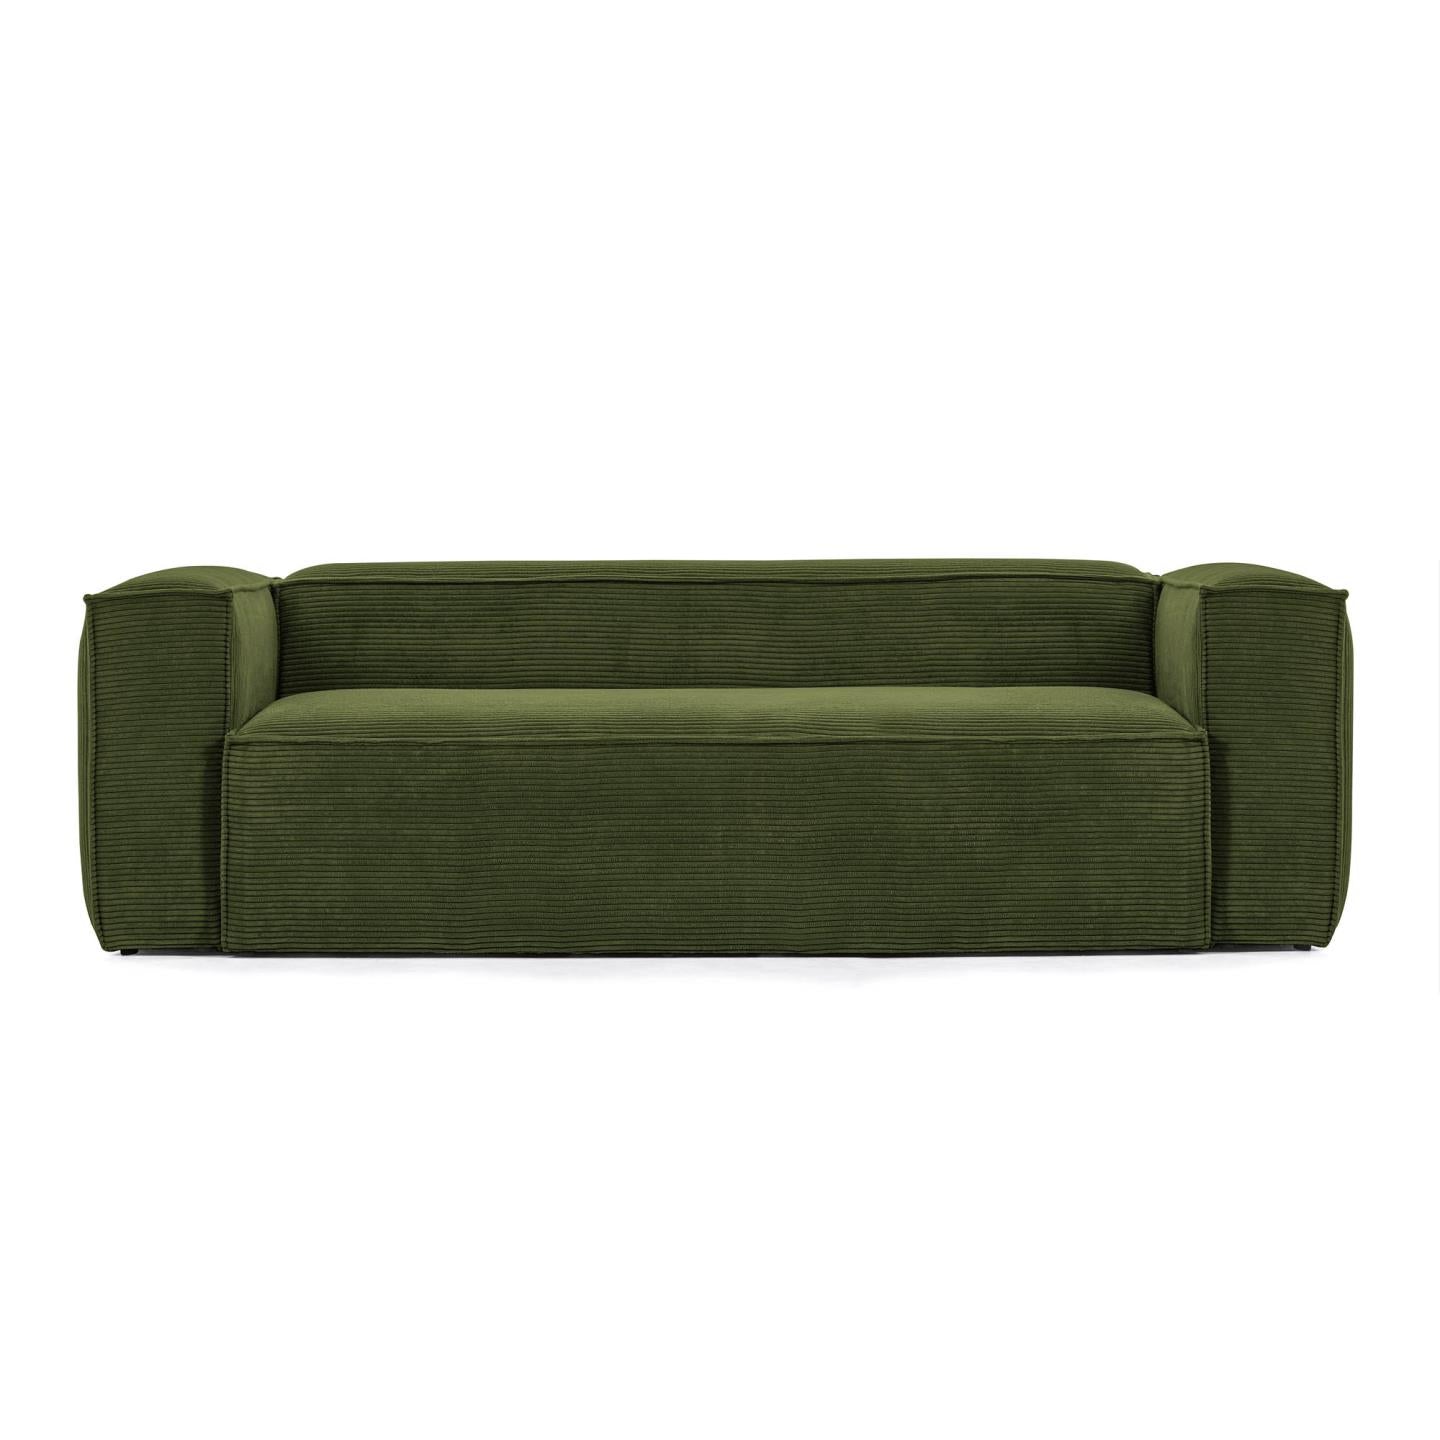 Blok 3 seater sofa in green wide seam corduroy, 240 cm